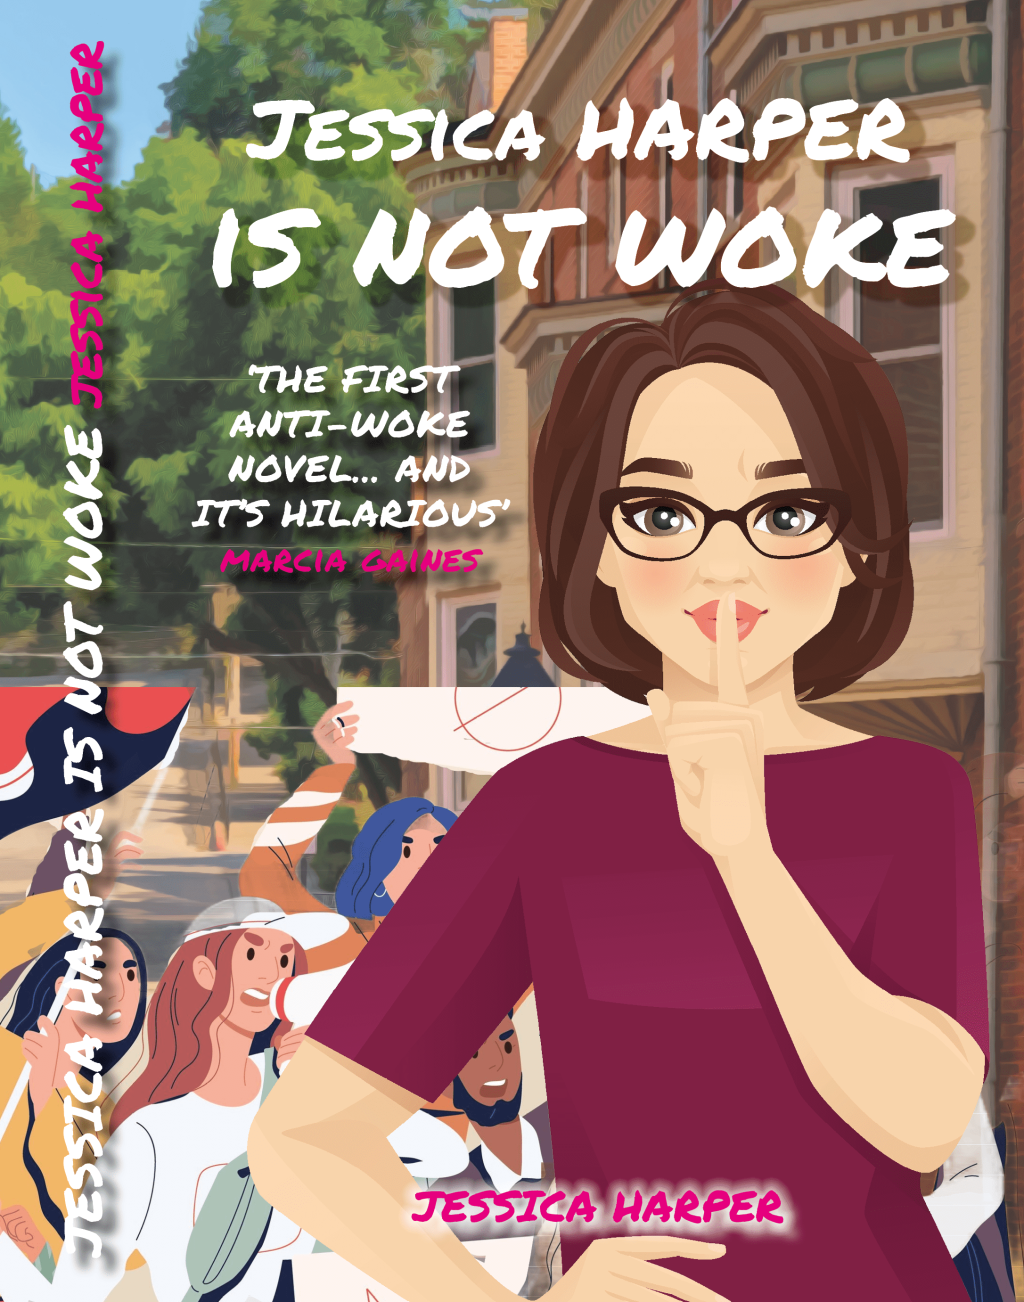 Meet the world’s most woke bookshop: a sample chapter from Jessica Harper Is Not Woke, the world’s first anti-woke novel